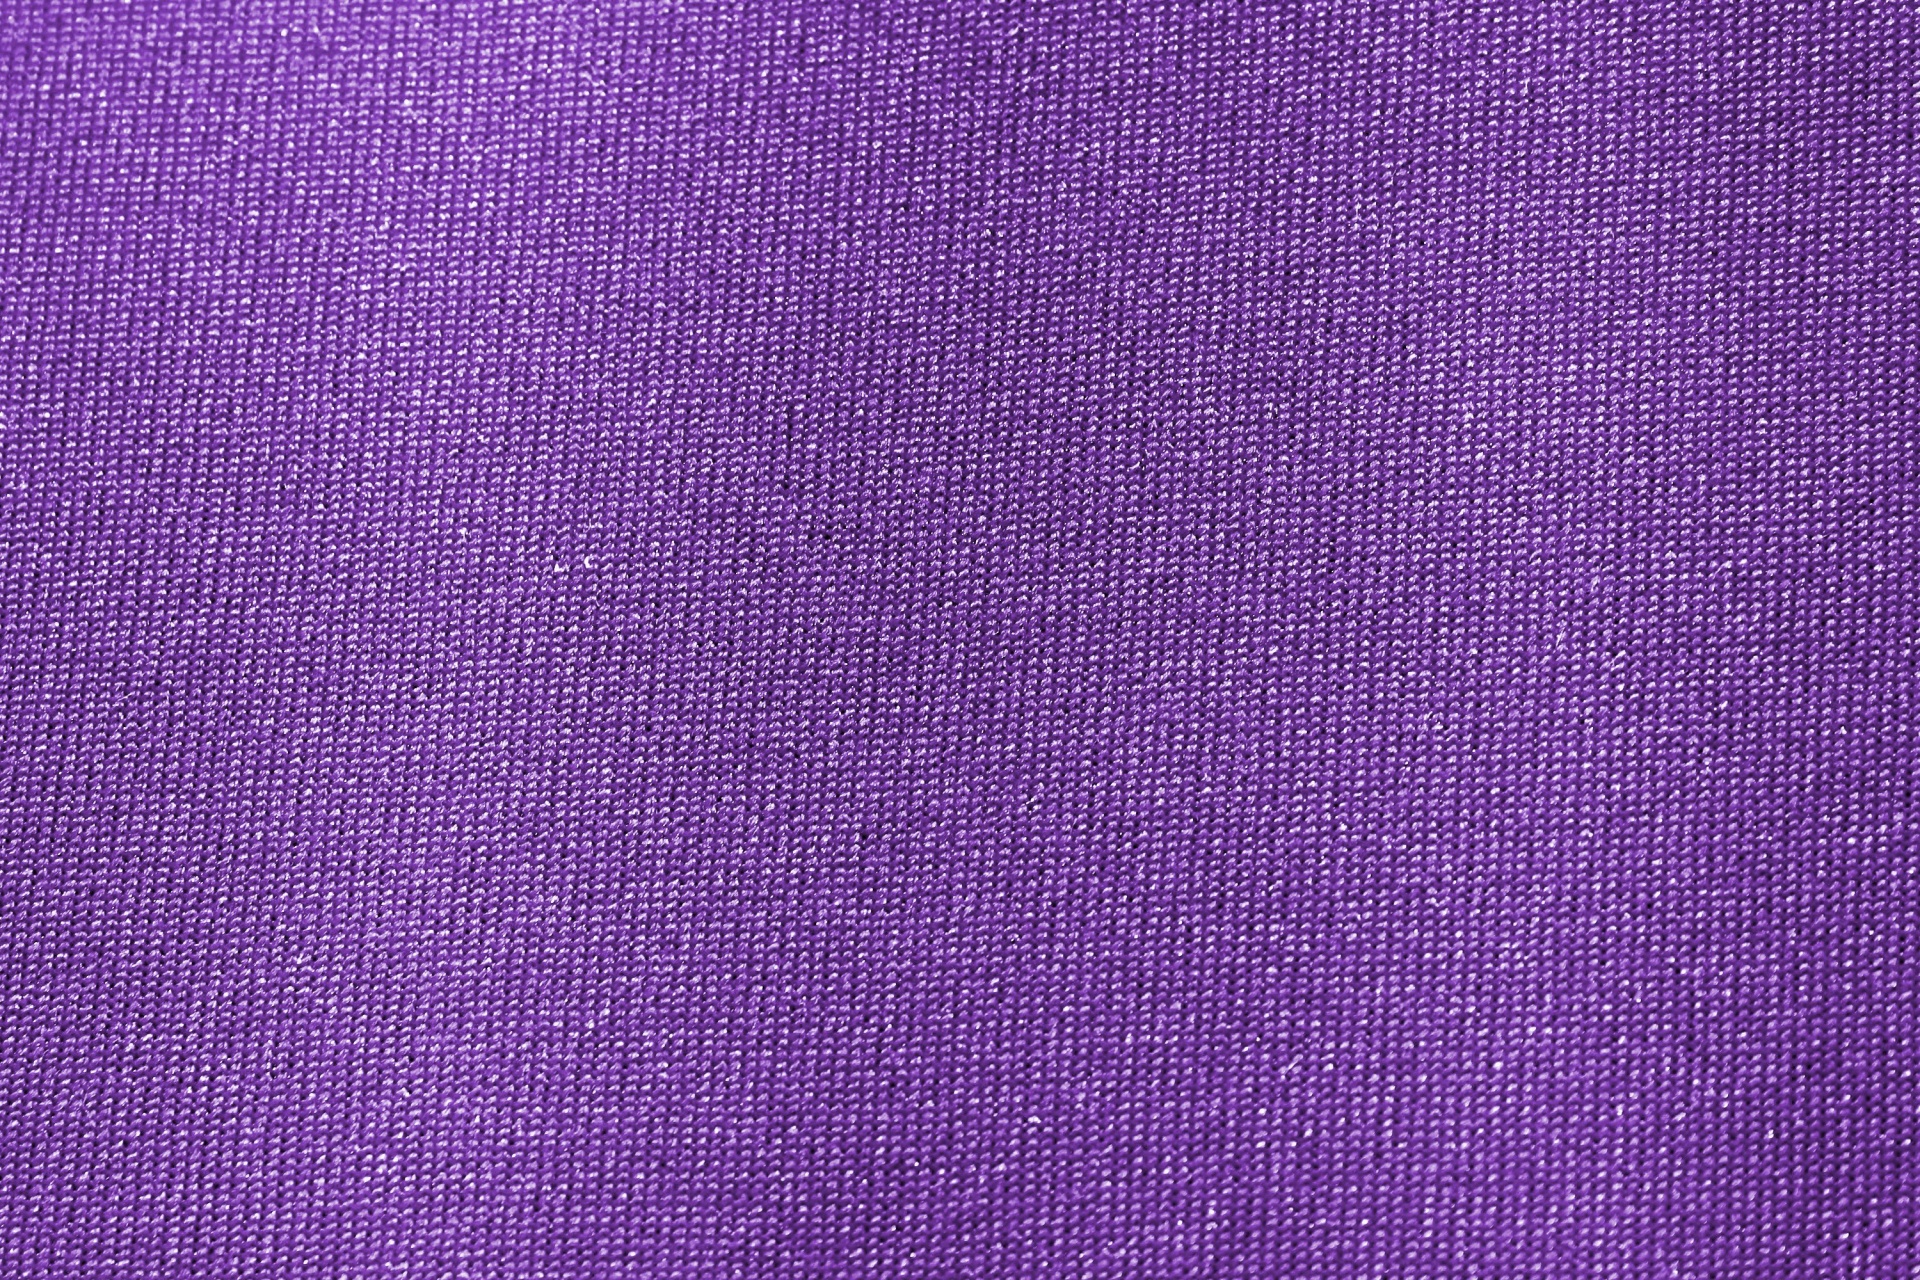 Background Purple, Texture